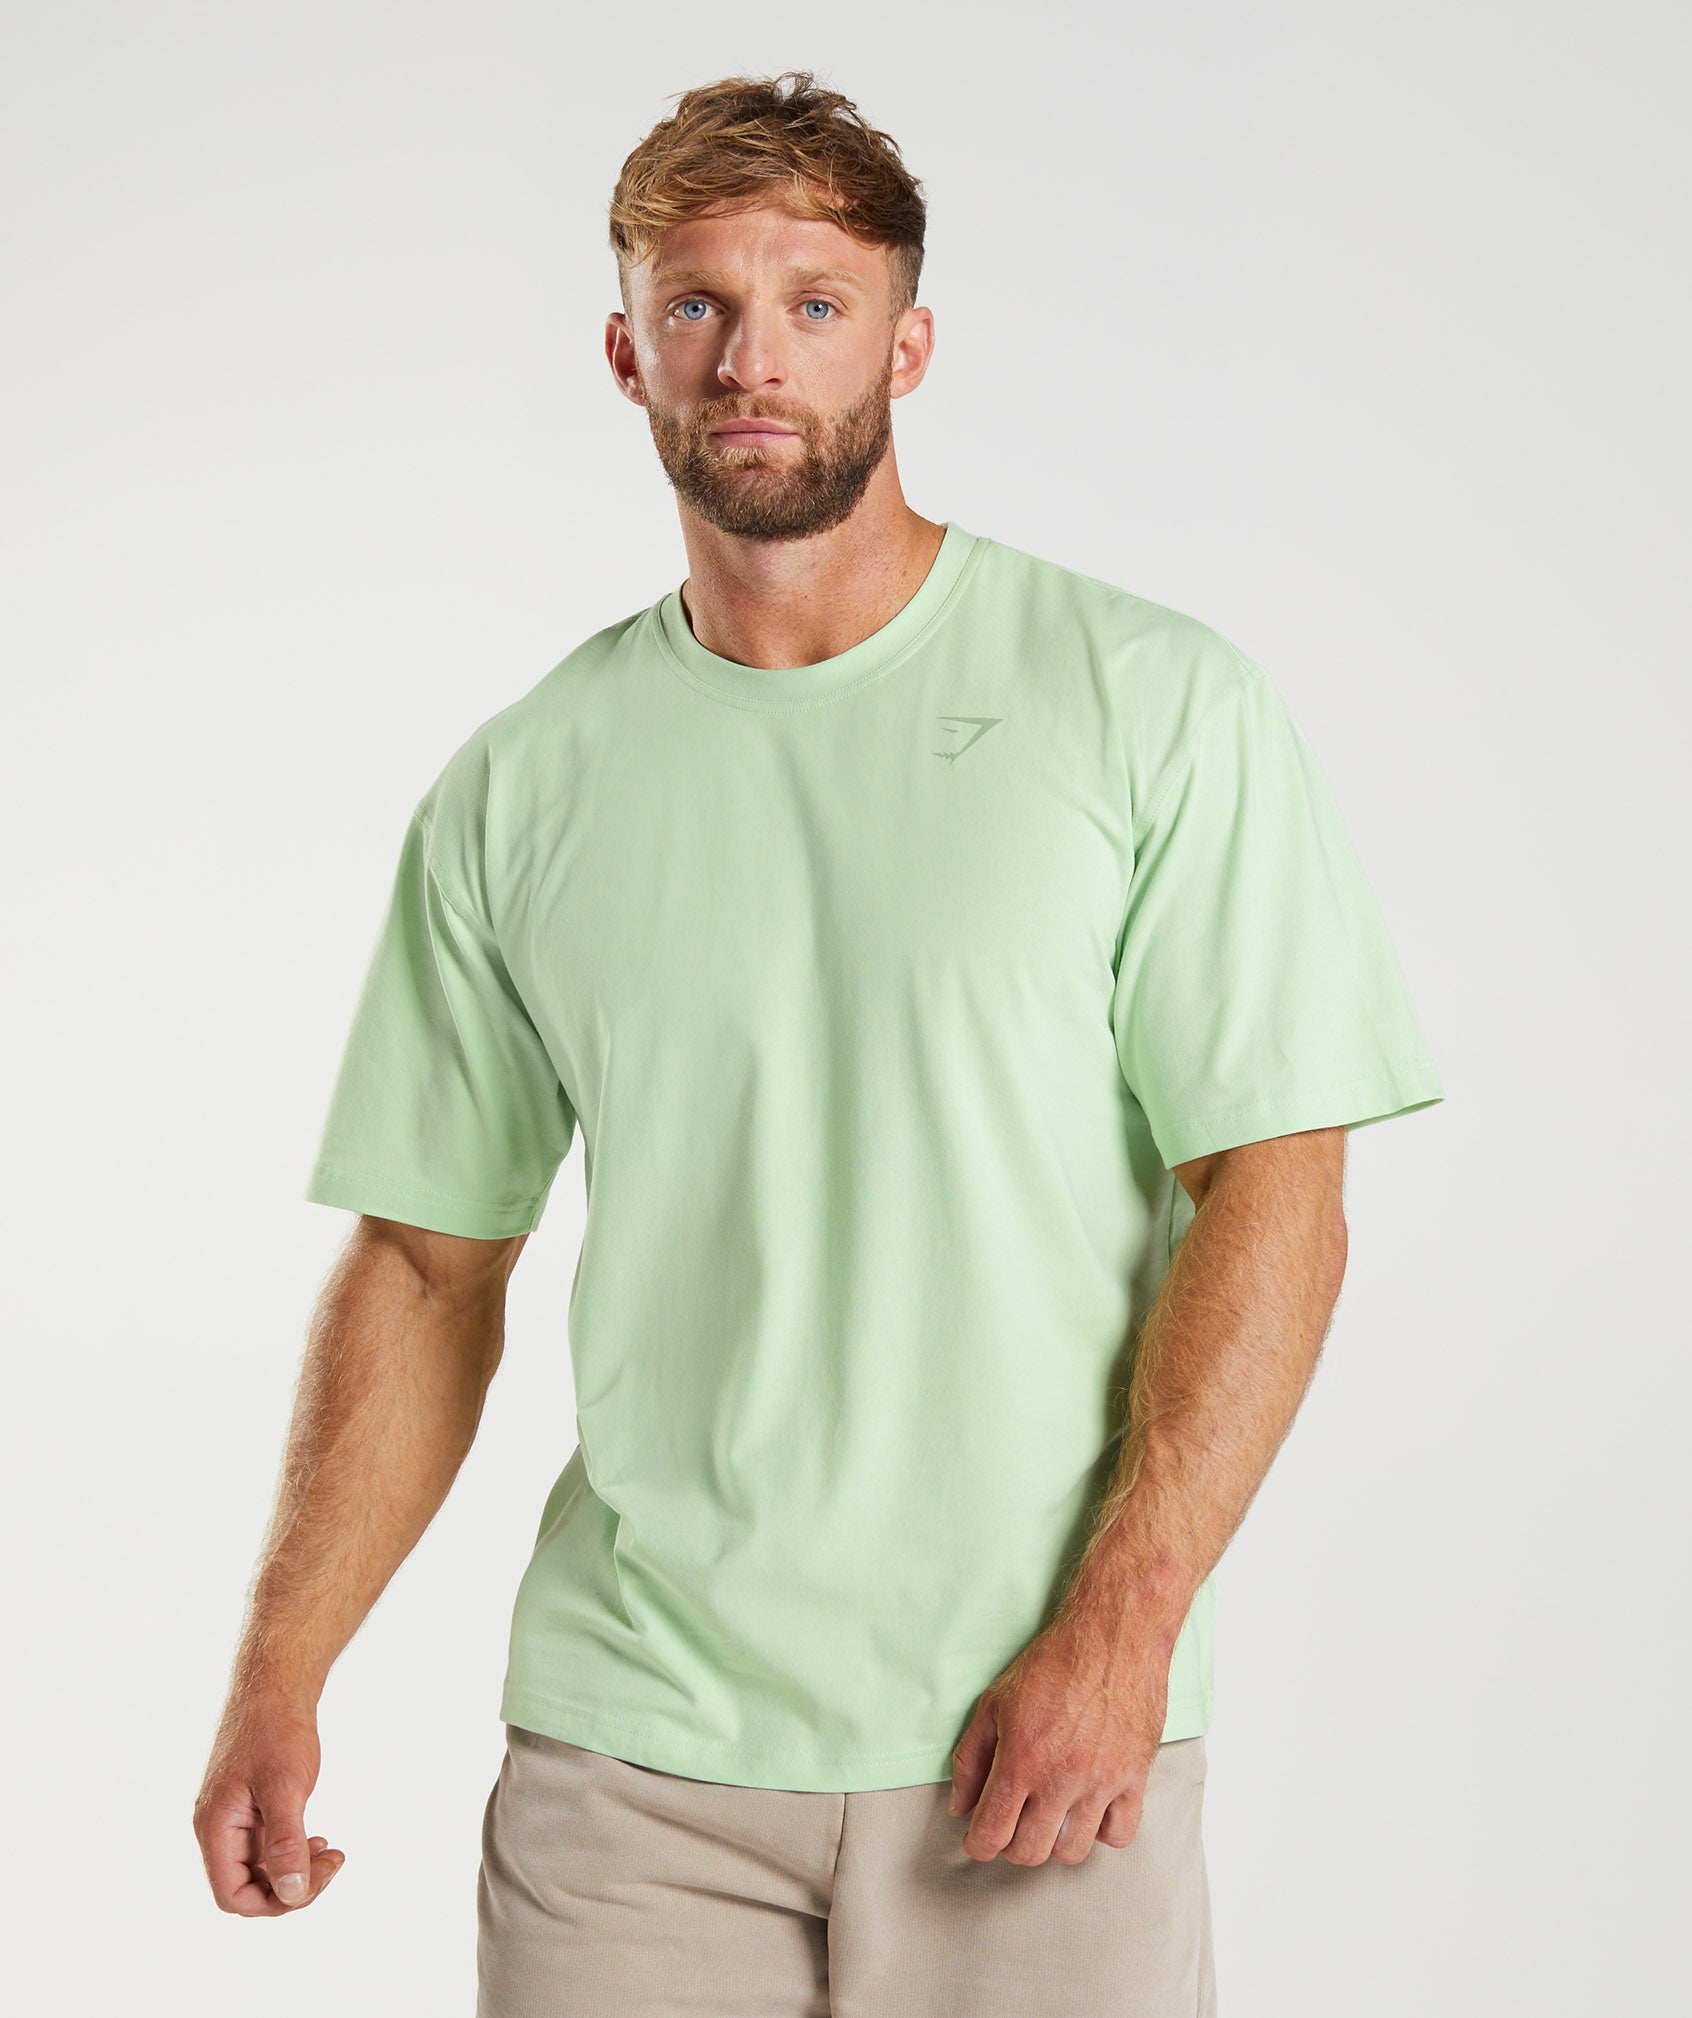 Power T-Shirt in Aloe Green - view 2